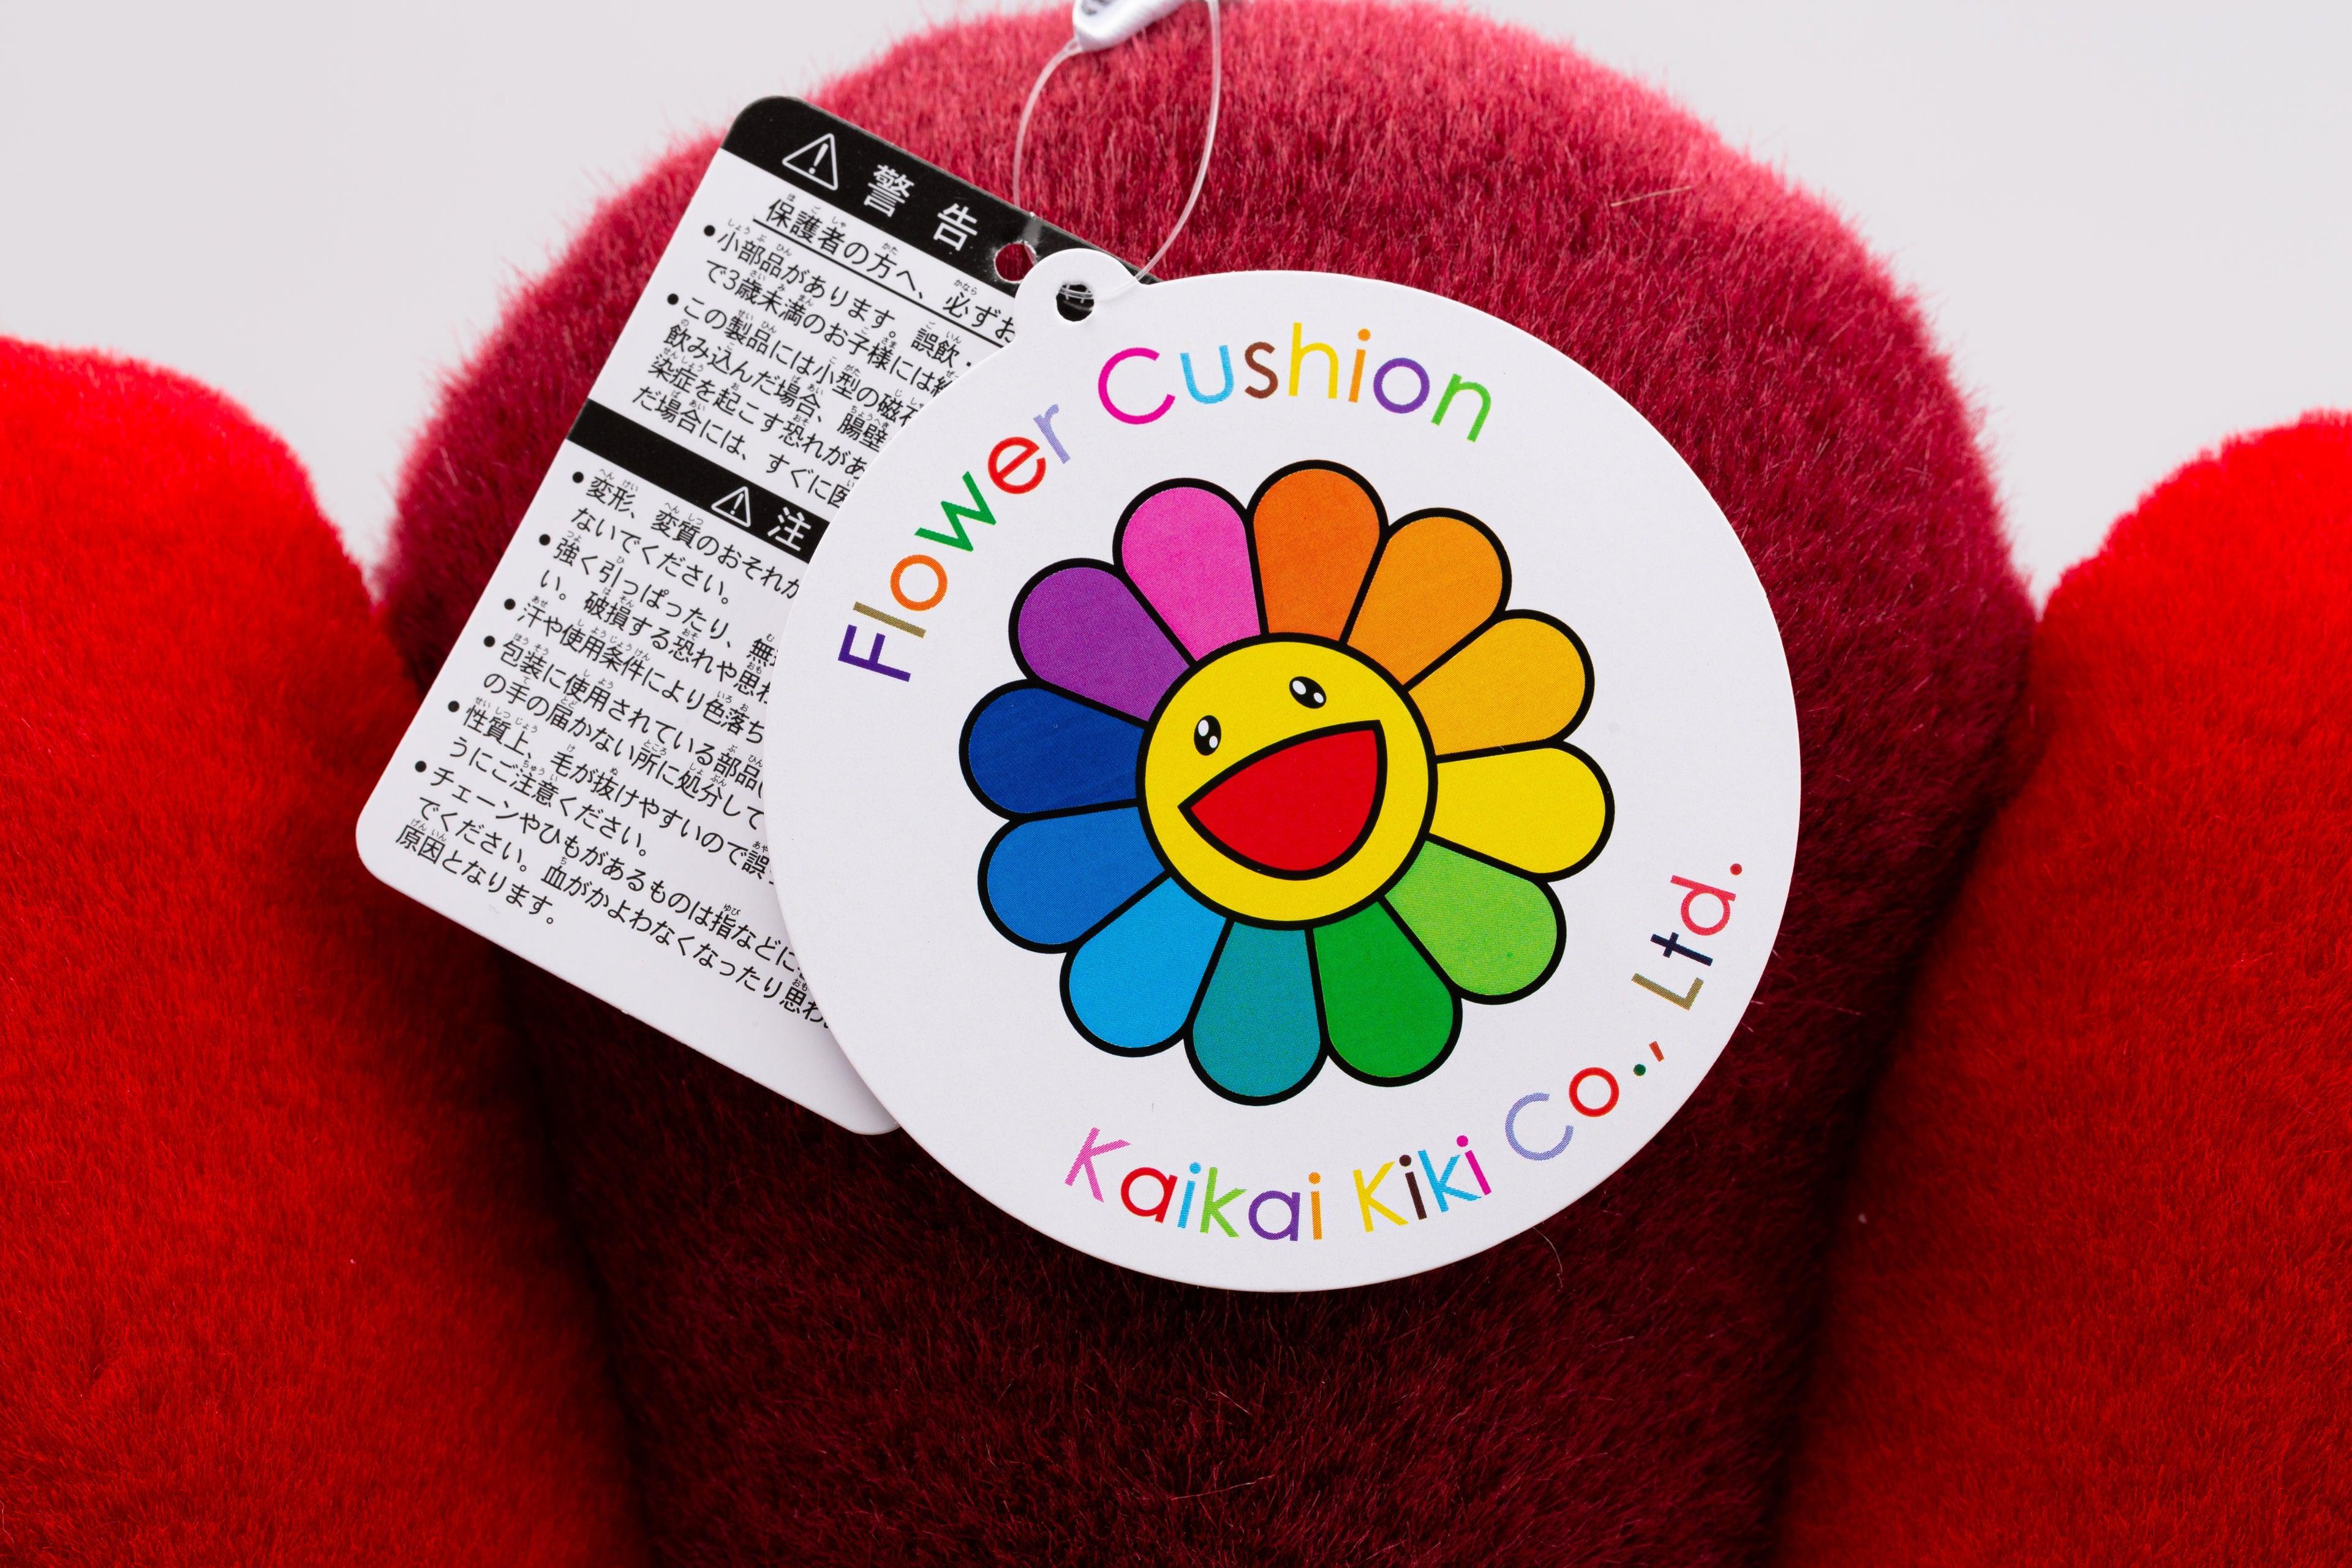 Alternate View 5 of Takashi Murakami flower pillow cushion Rose and Red kaikai kiki